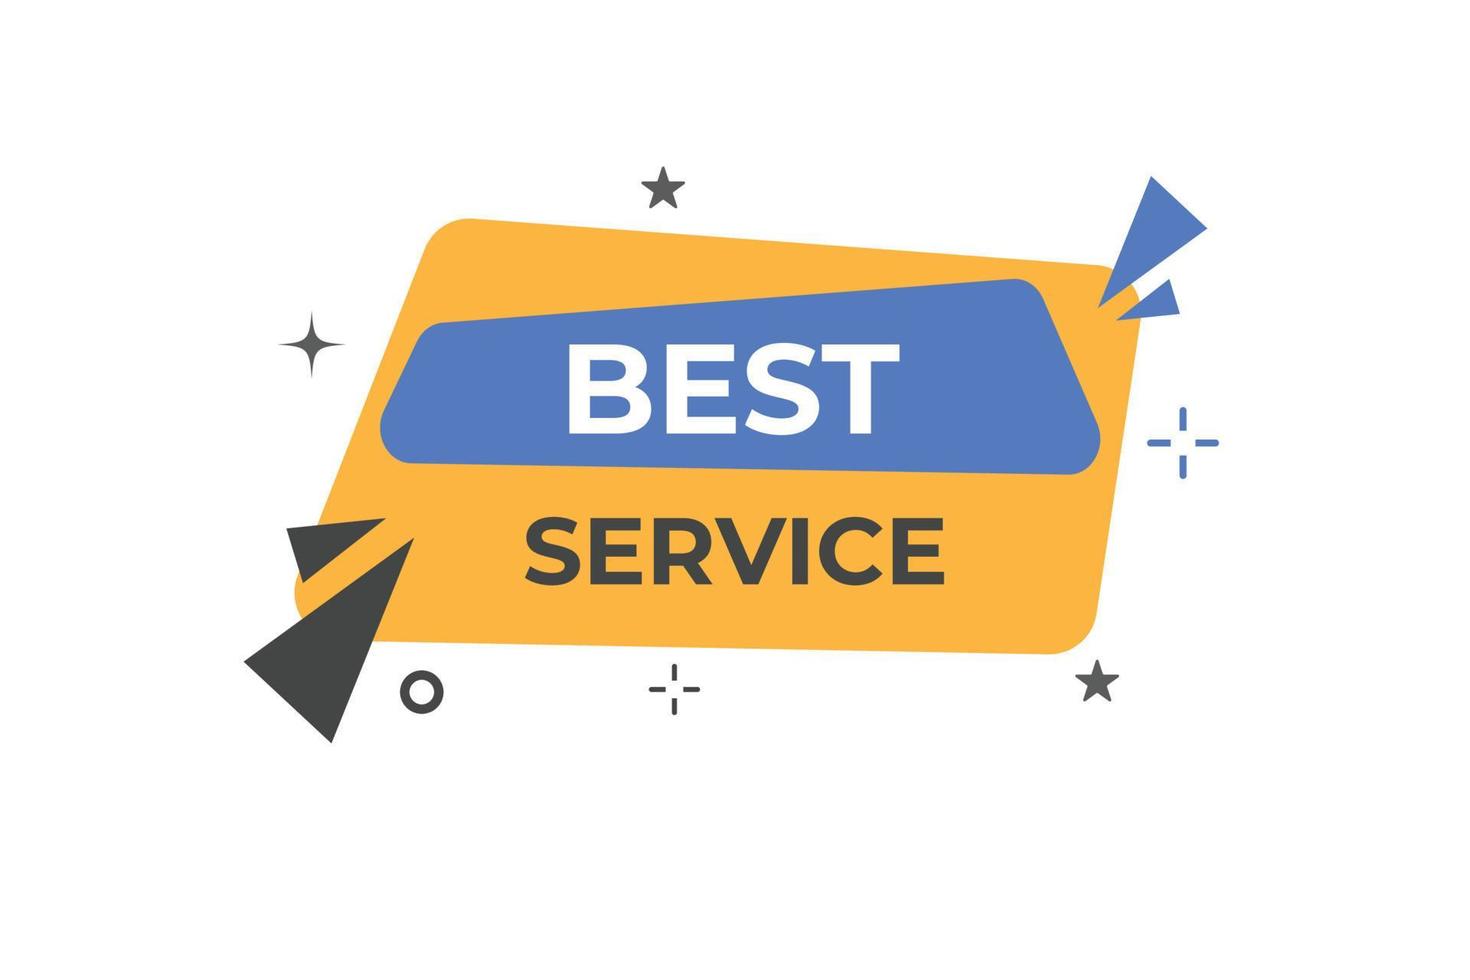 best service Button. web template, Speech Bubble, Banner Label best service. sign icon Vector illustration